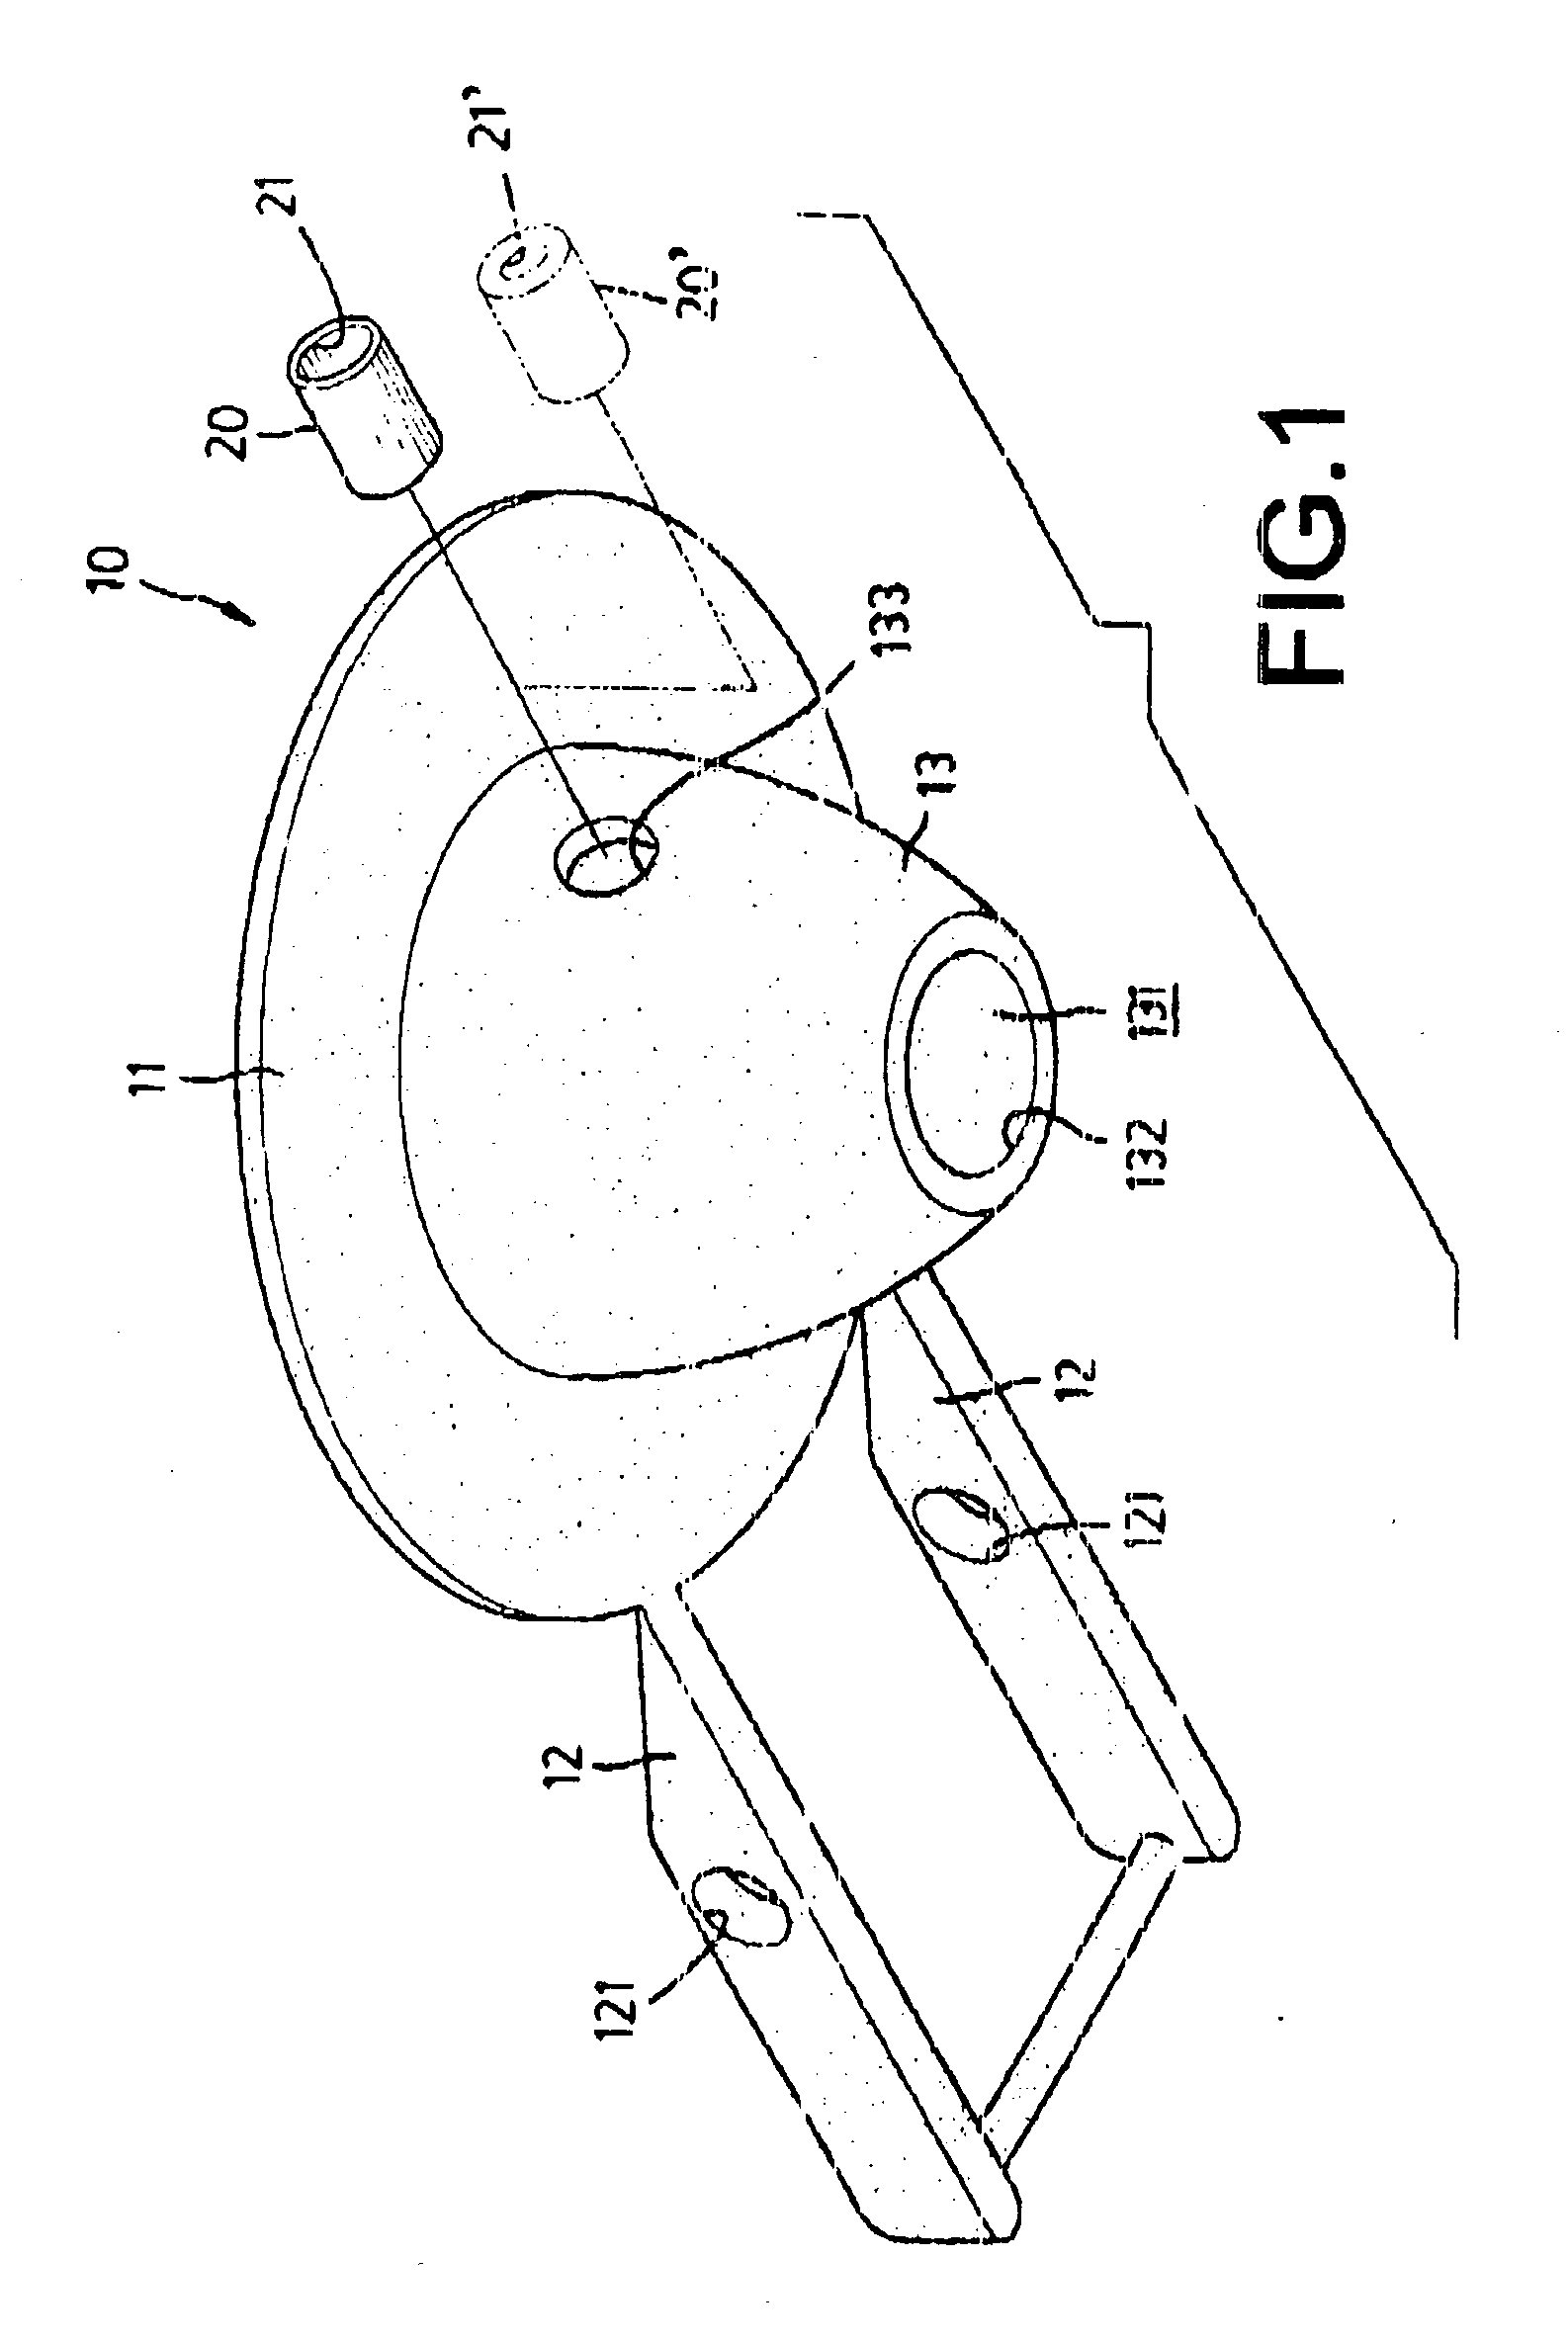 Flapper valve for a toilet tank